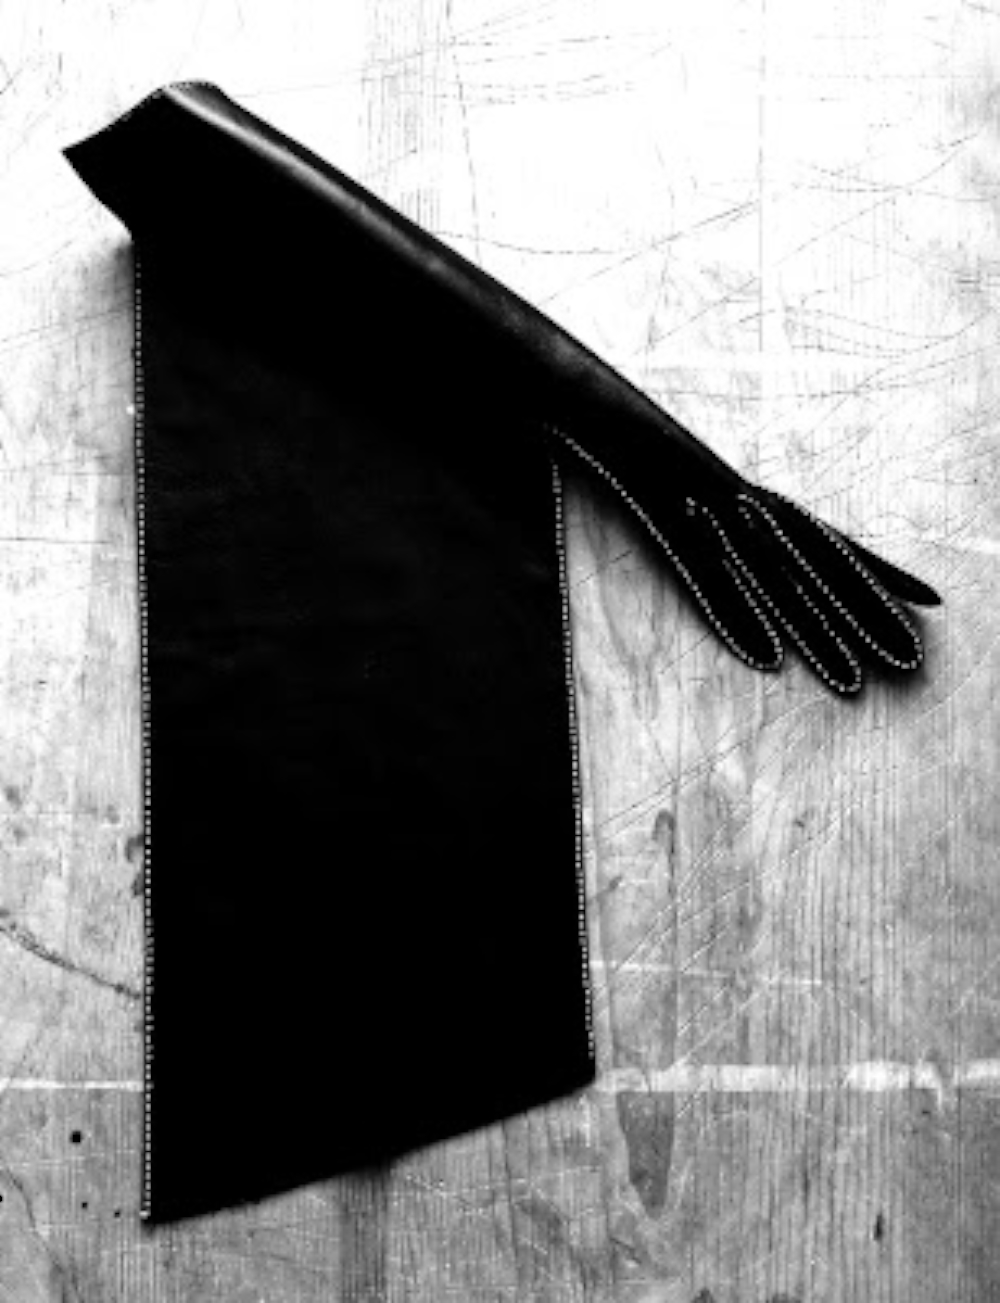 Sculptural glove (black lambskin leather, hand sewn).